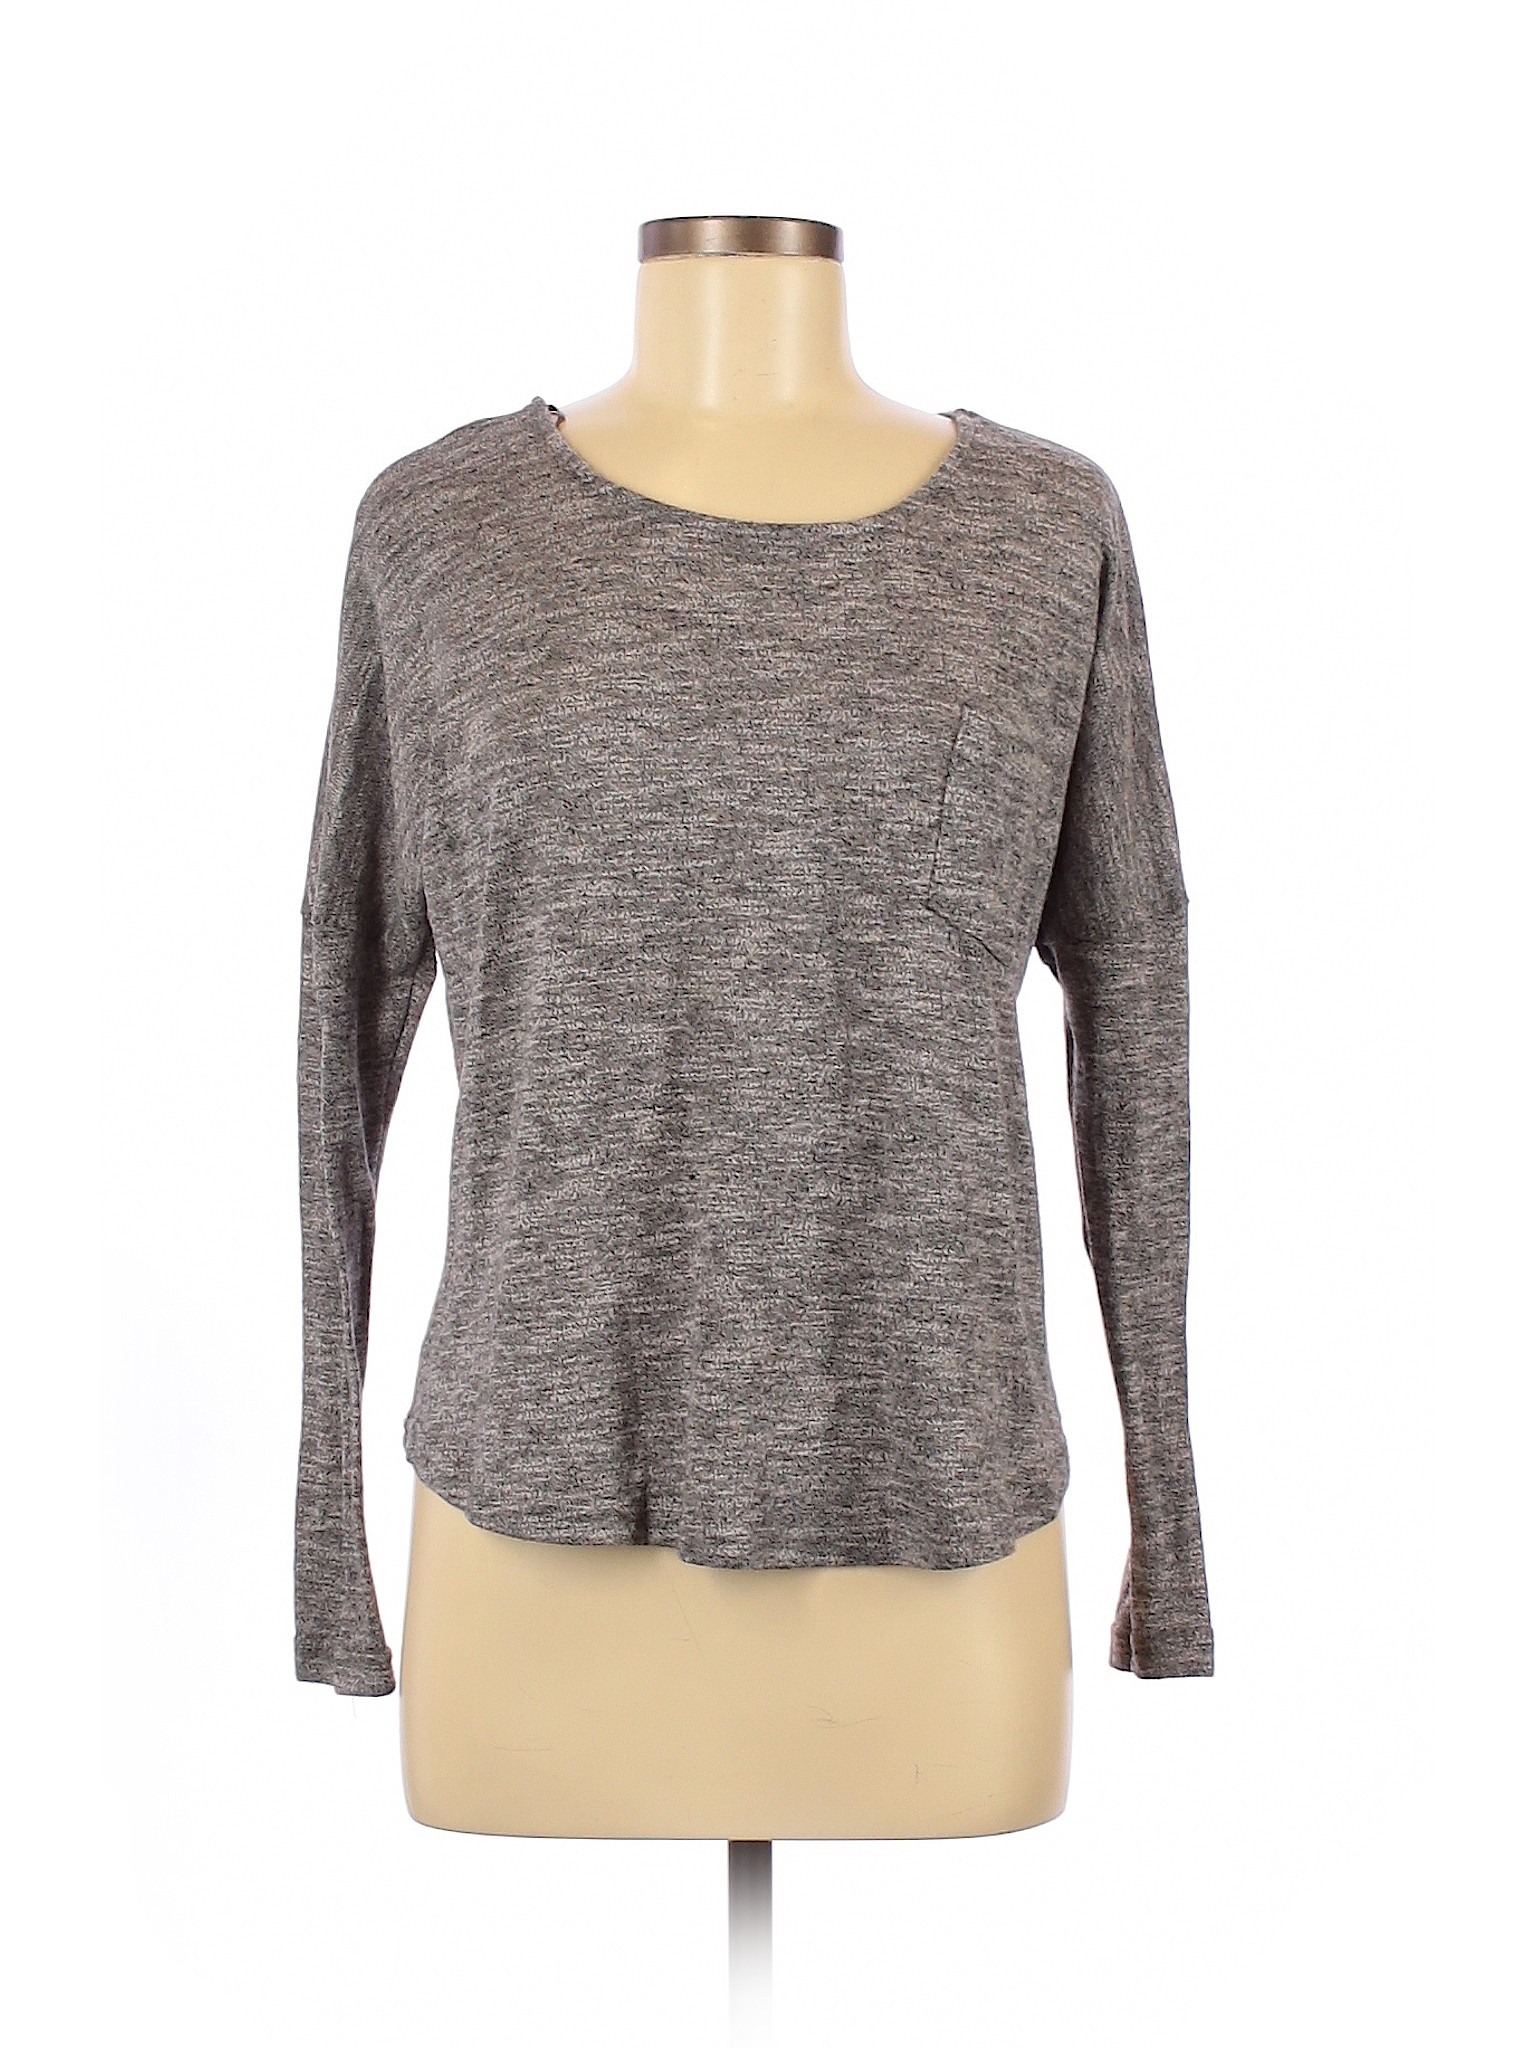 Double Zero Women Gray Long Sleeve Top M | eBay